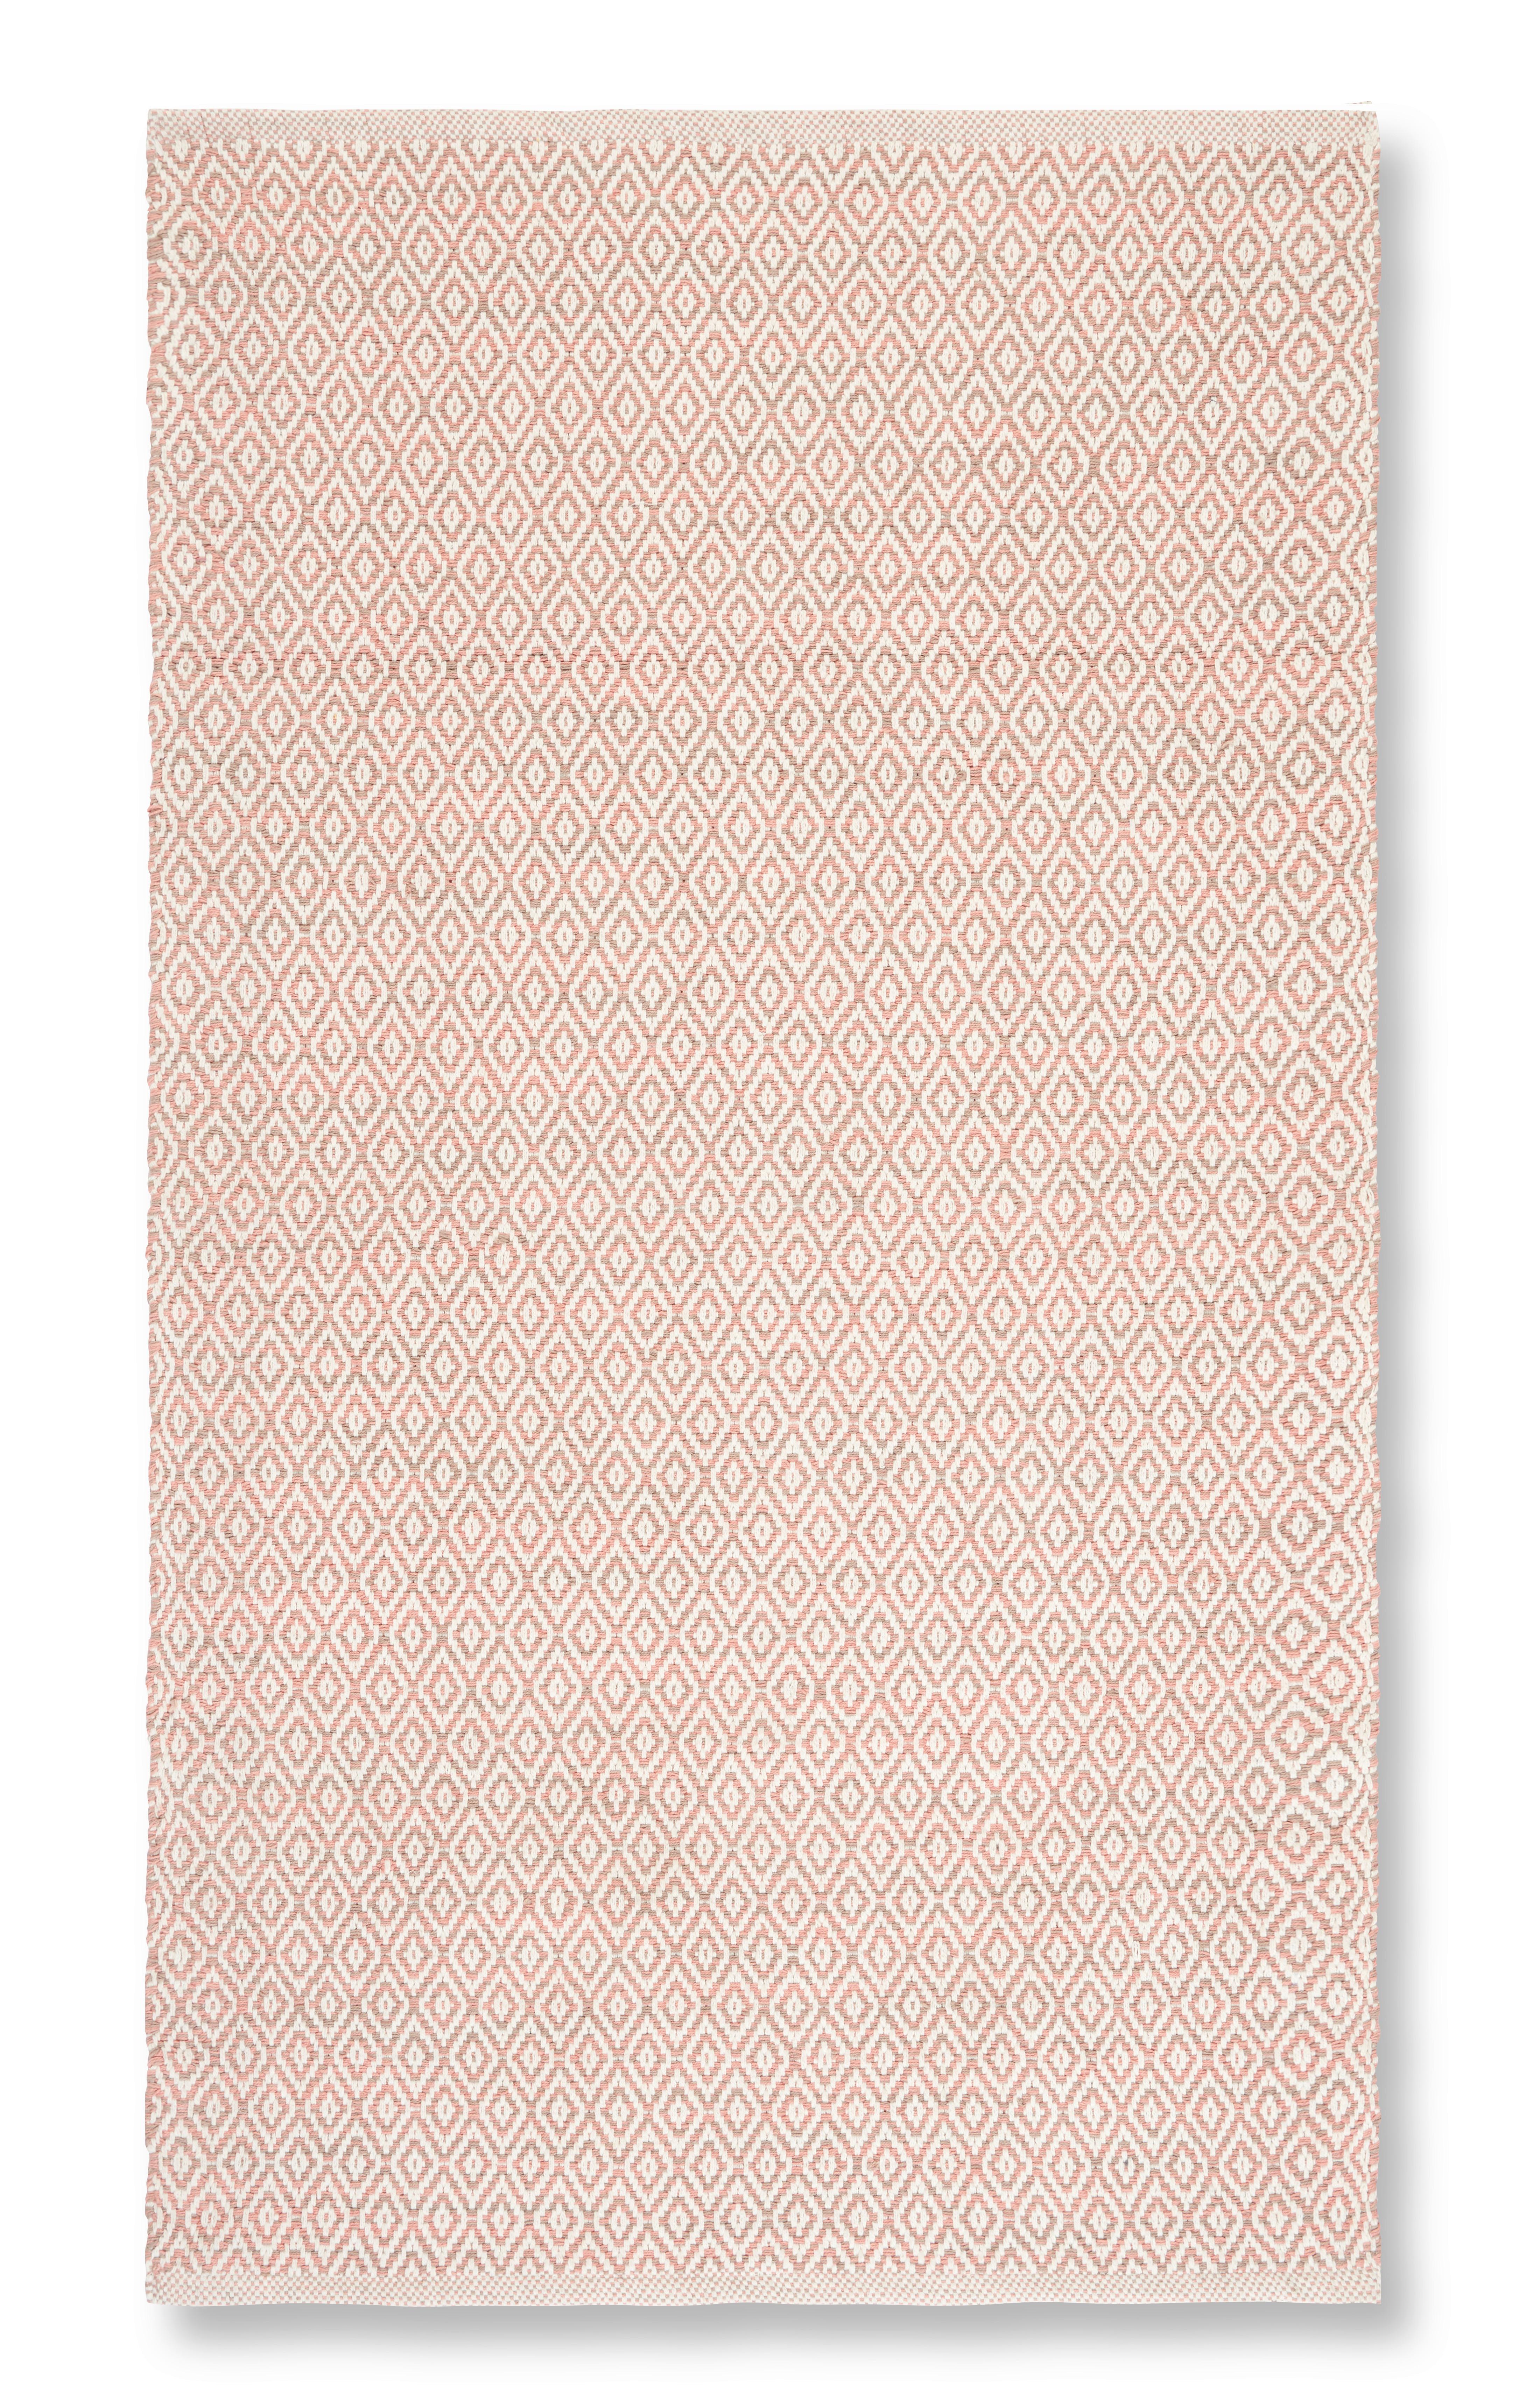 Covor țesut de mână CAROLA 2 - roz, Basics, textil (80/150cm) - Modern Living